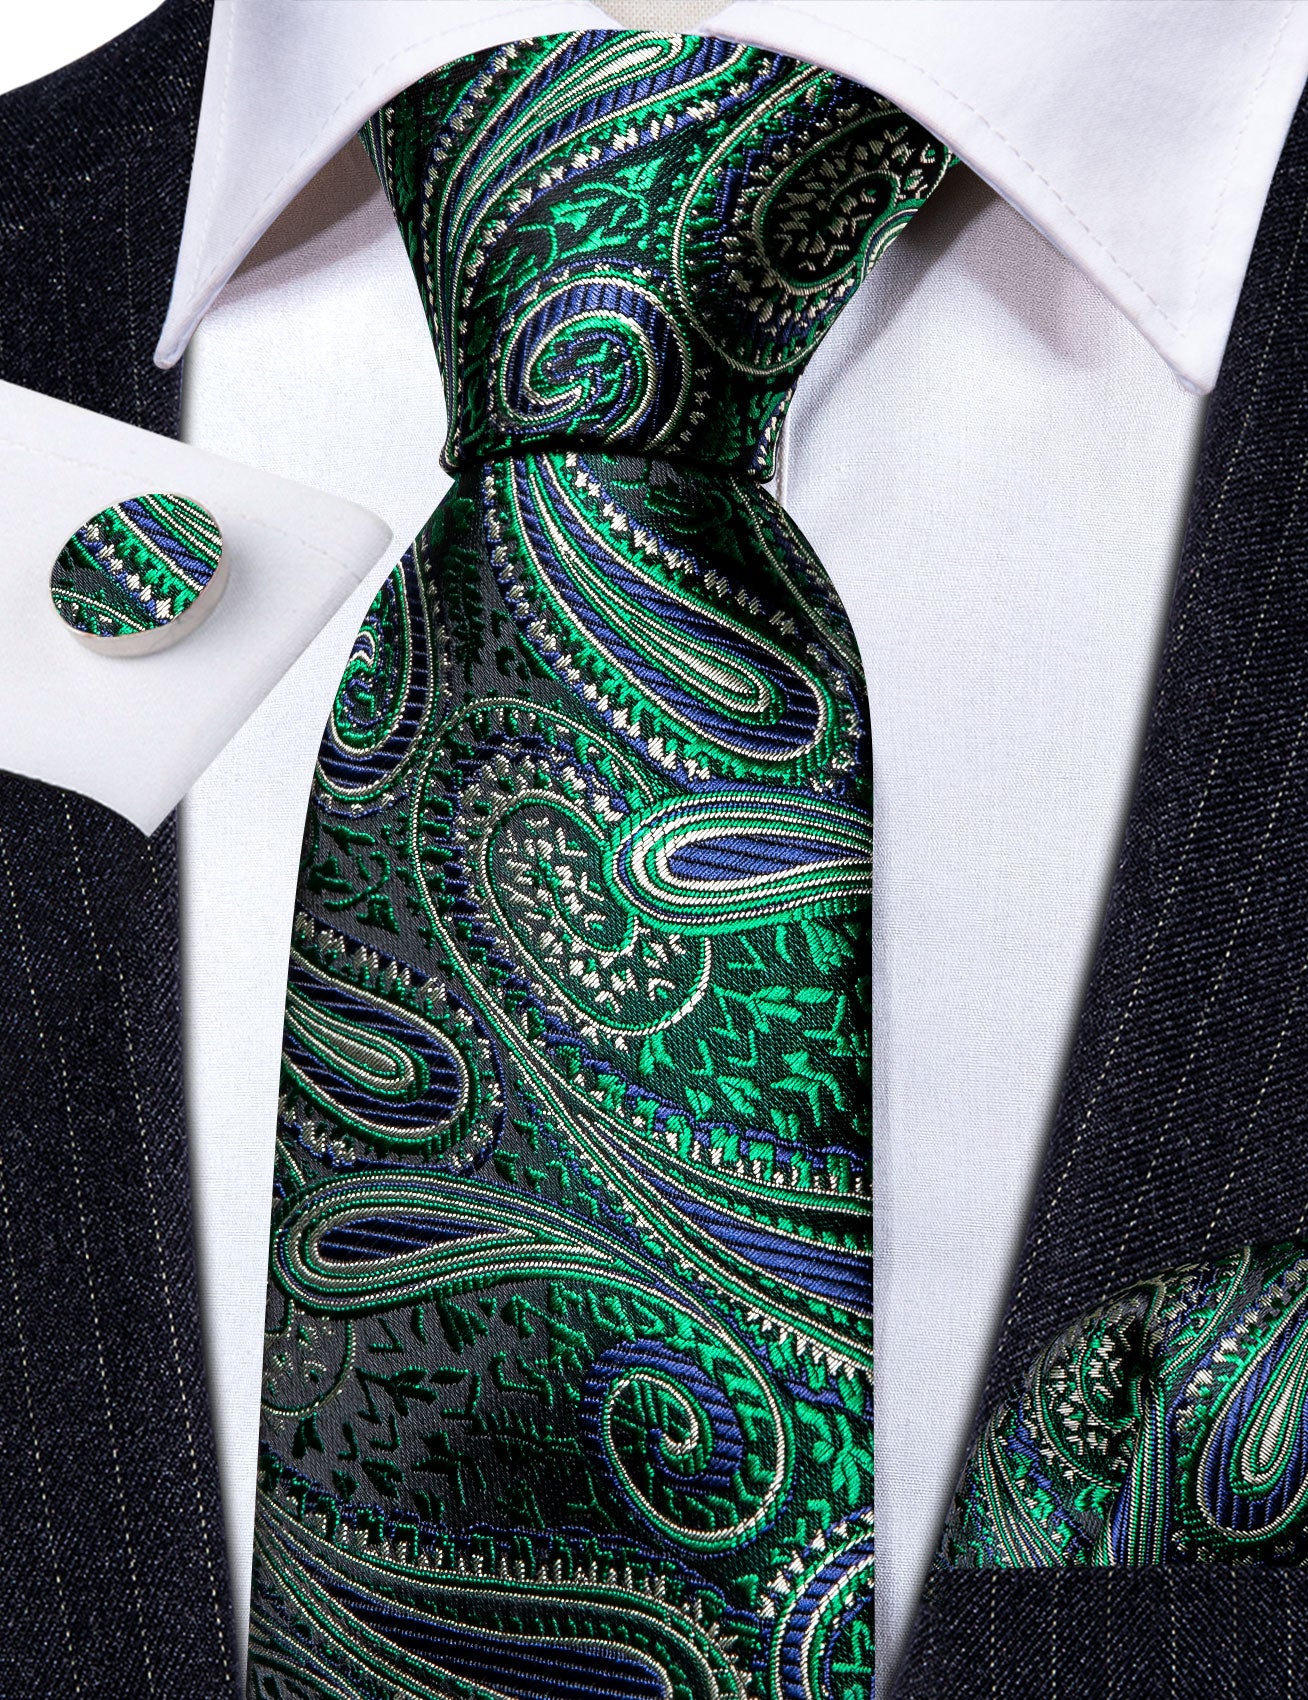 Barry Wang Green Tie Jacquard Paisley Silk Tie Hanky Cufflinks Set